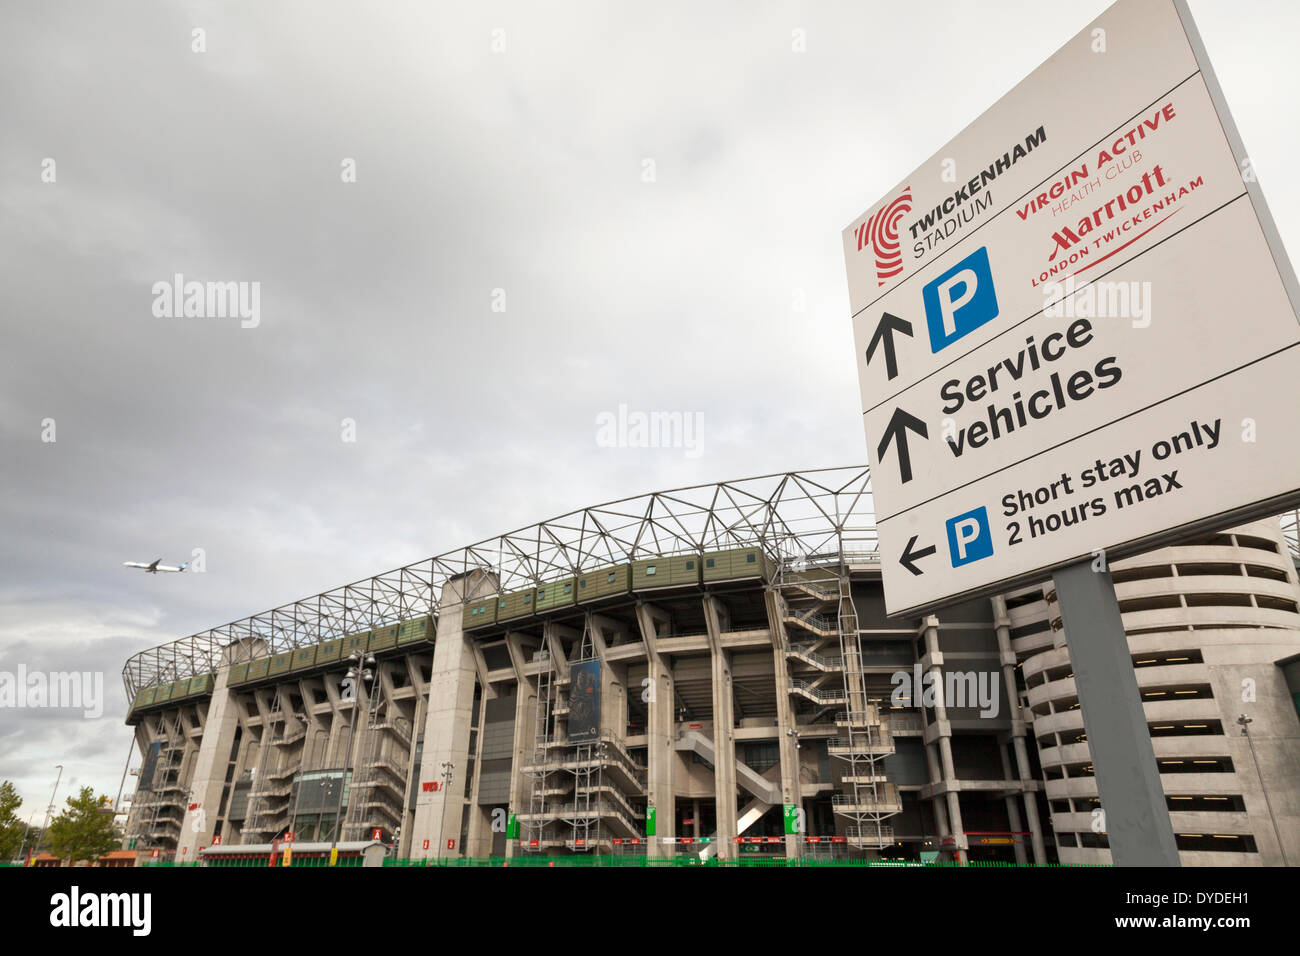 Twickenham stadium with parking information sign and aircraft. Stock Photo